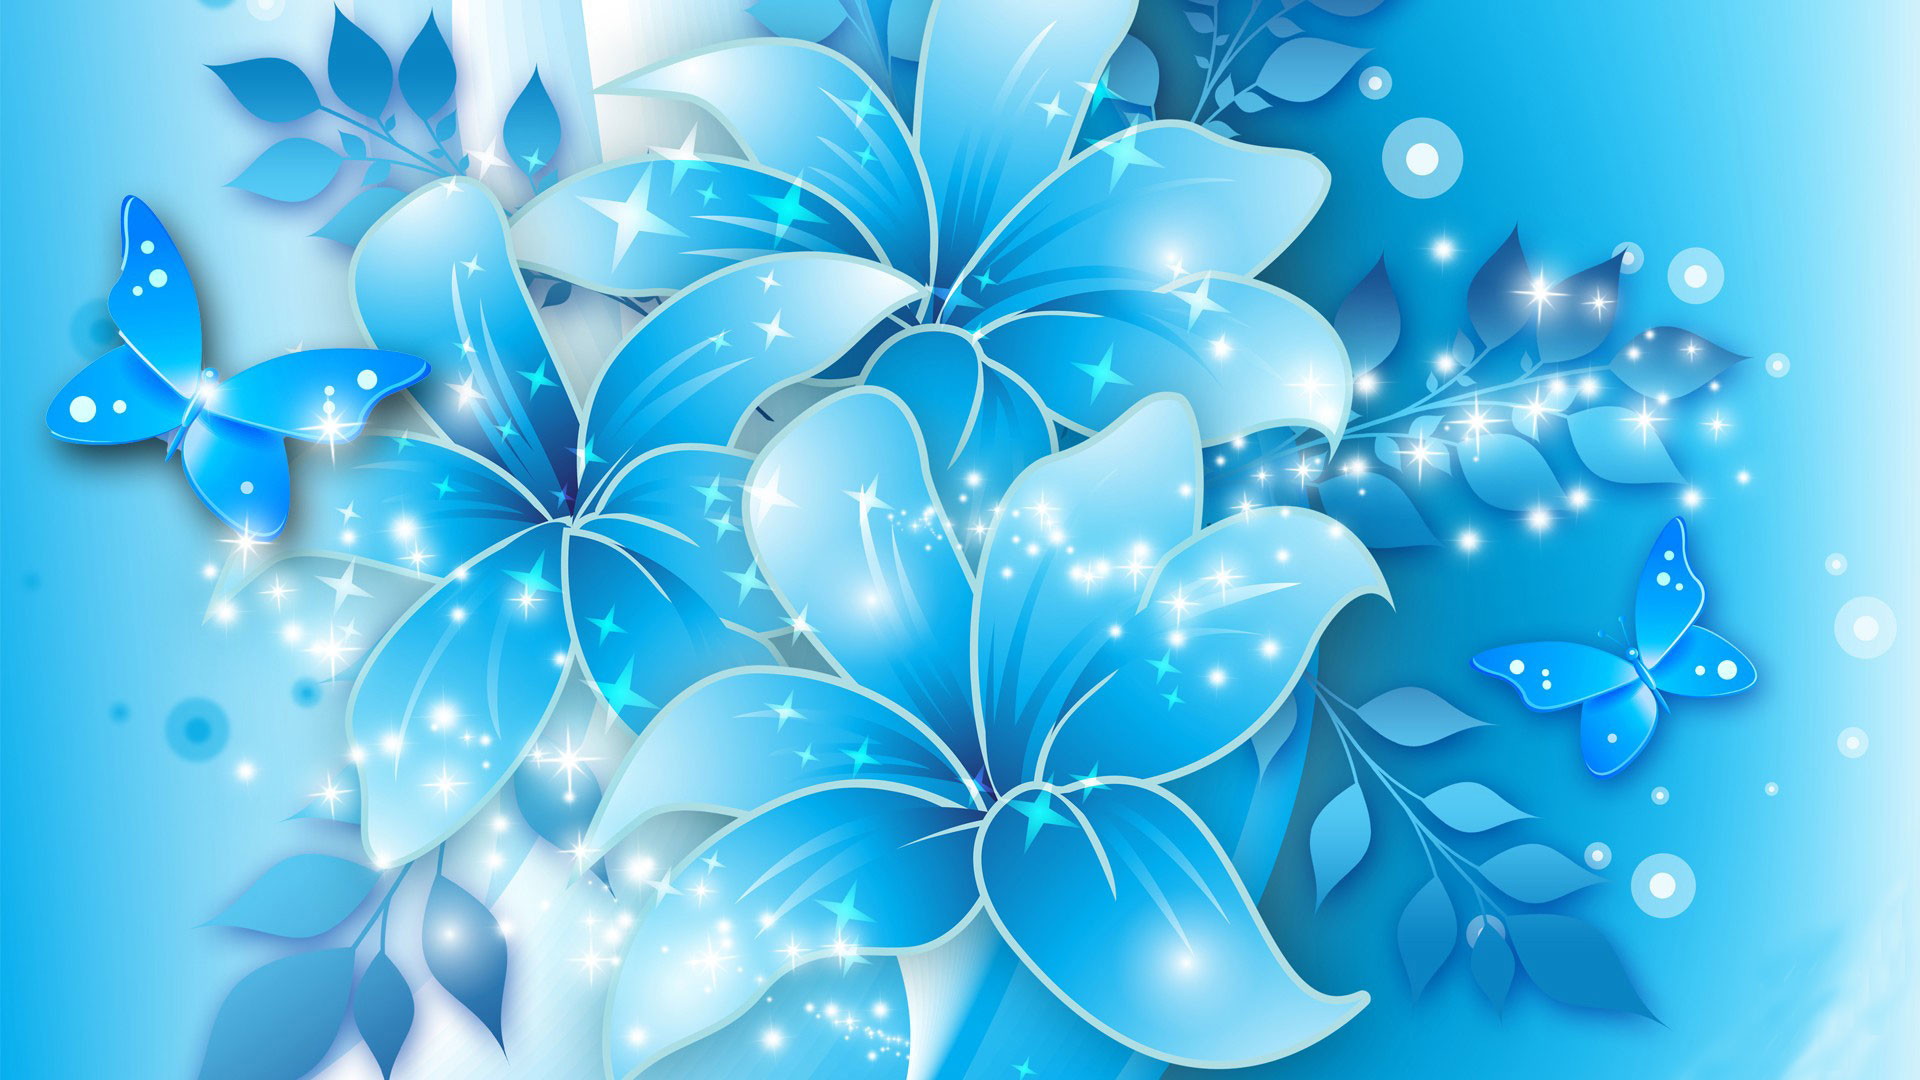 1920x1080 BEST BEAUTIFUL 3D ART BLUE FLOWERS NICE HD QUALITY DESKTOP .